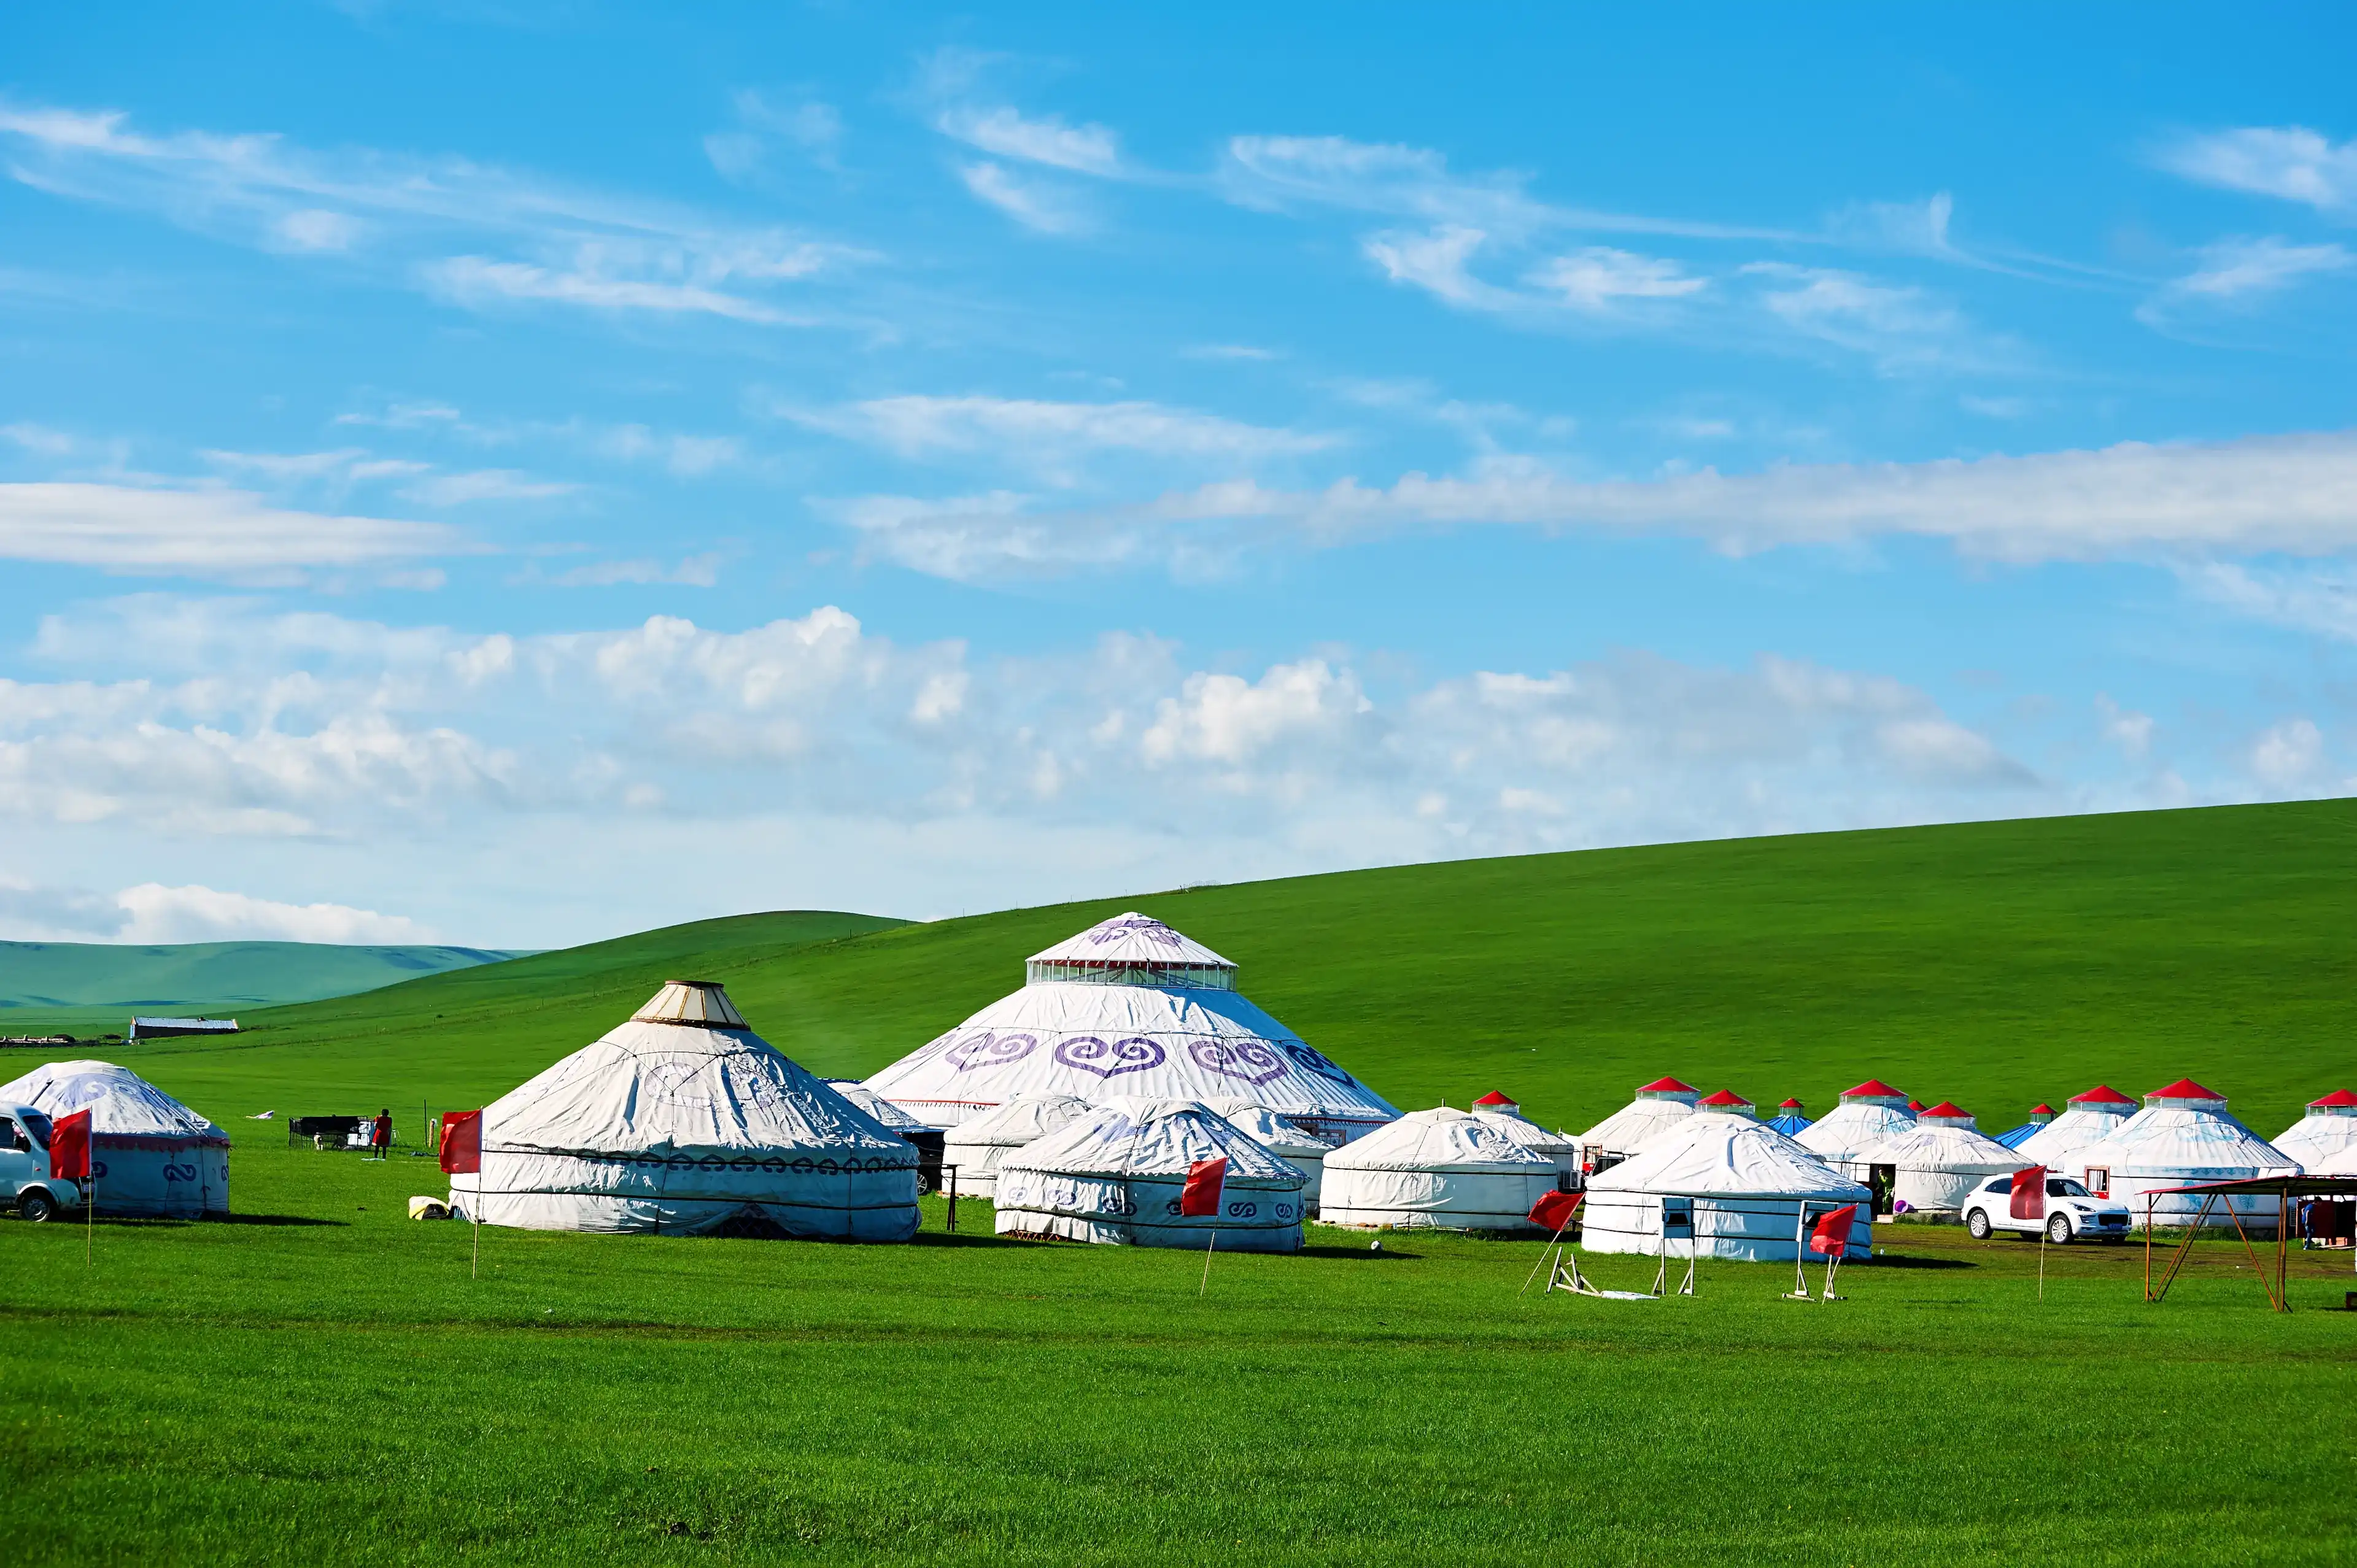 Mongolia yurts in the summer grassland of Hulunbuir, Inner mongolia, China